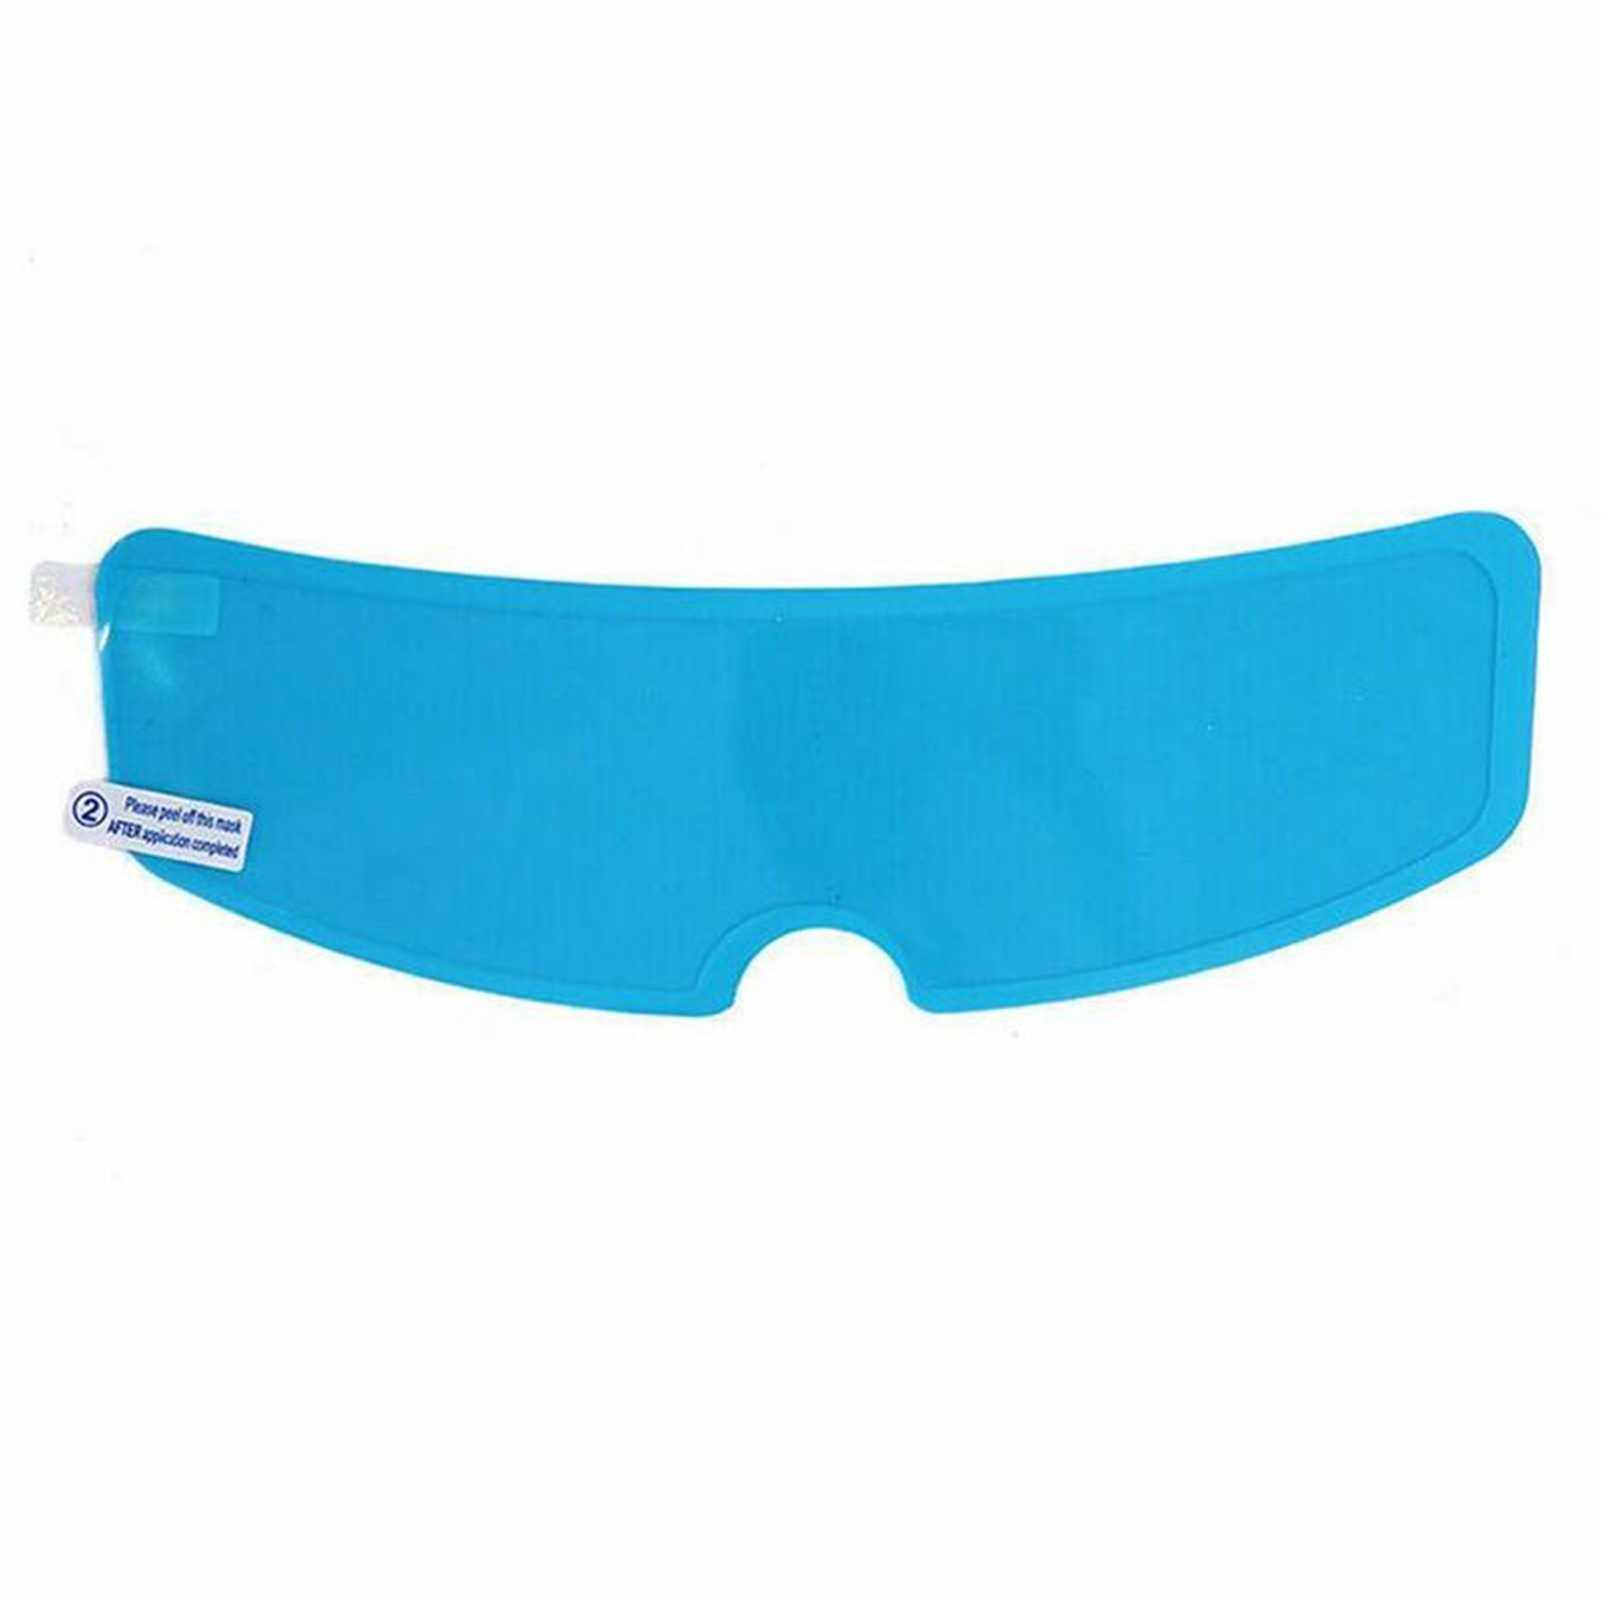 Universal Anti Fog Rainproof Helmet Shield Film Raining Fog Anti Film for Helmet Visor Film Protection Sticker Lens Shield (Light Blue)